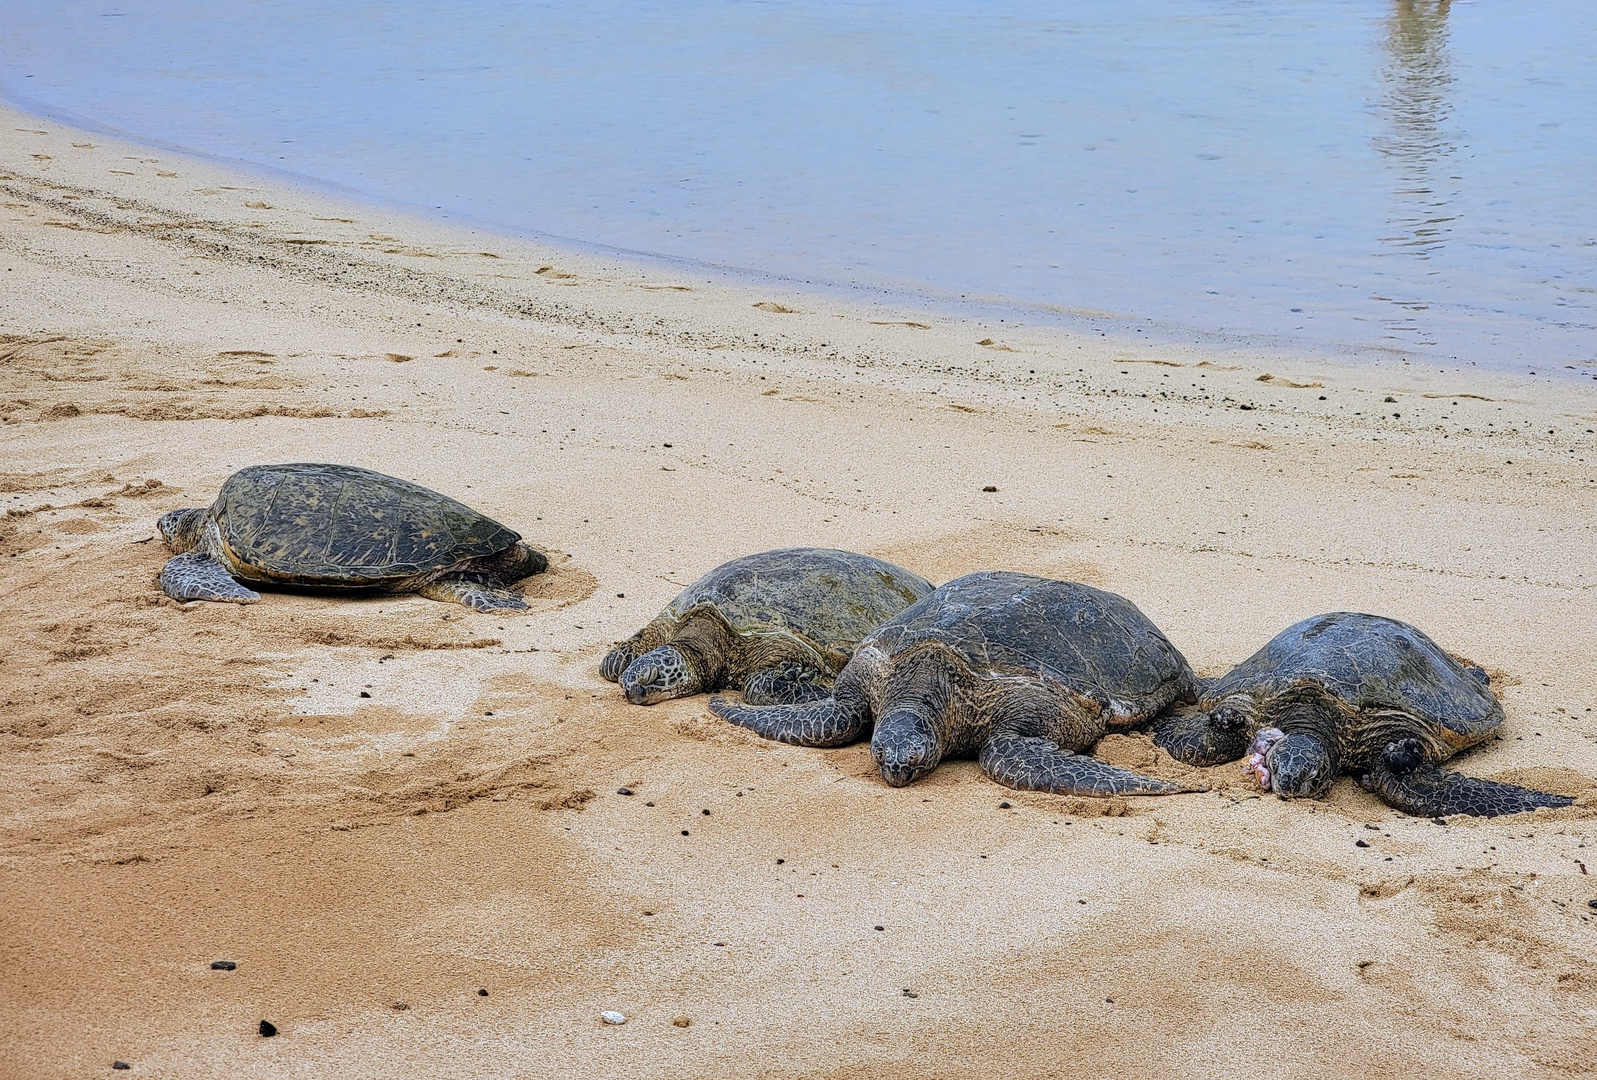 Hauula Vacation Rentals, Paradise Reef Retreat - Sea turtles!!